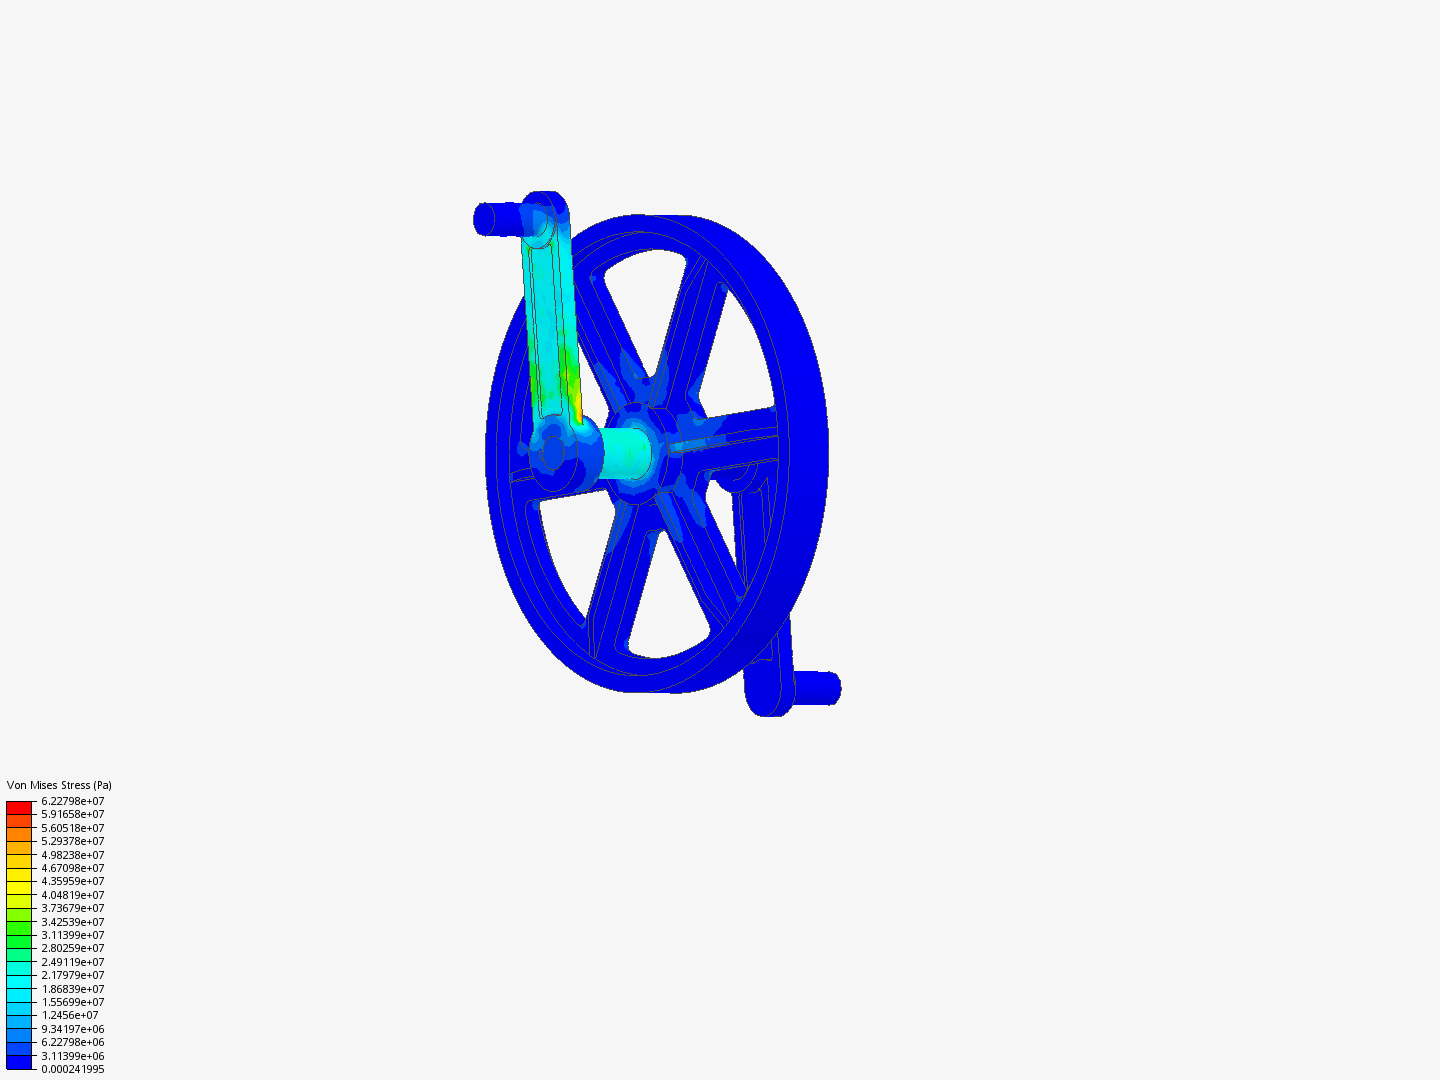 Simulation of a Crank Assembly - Copy image